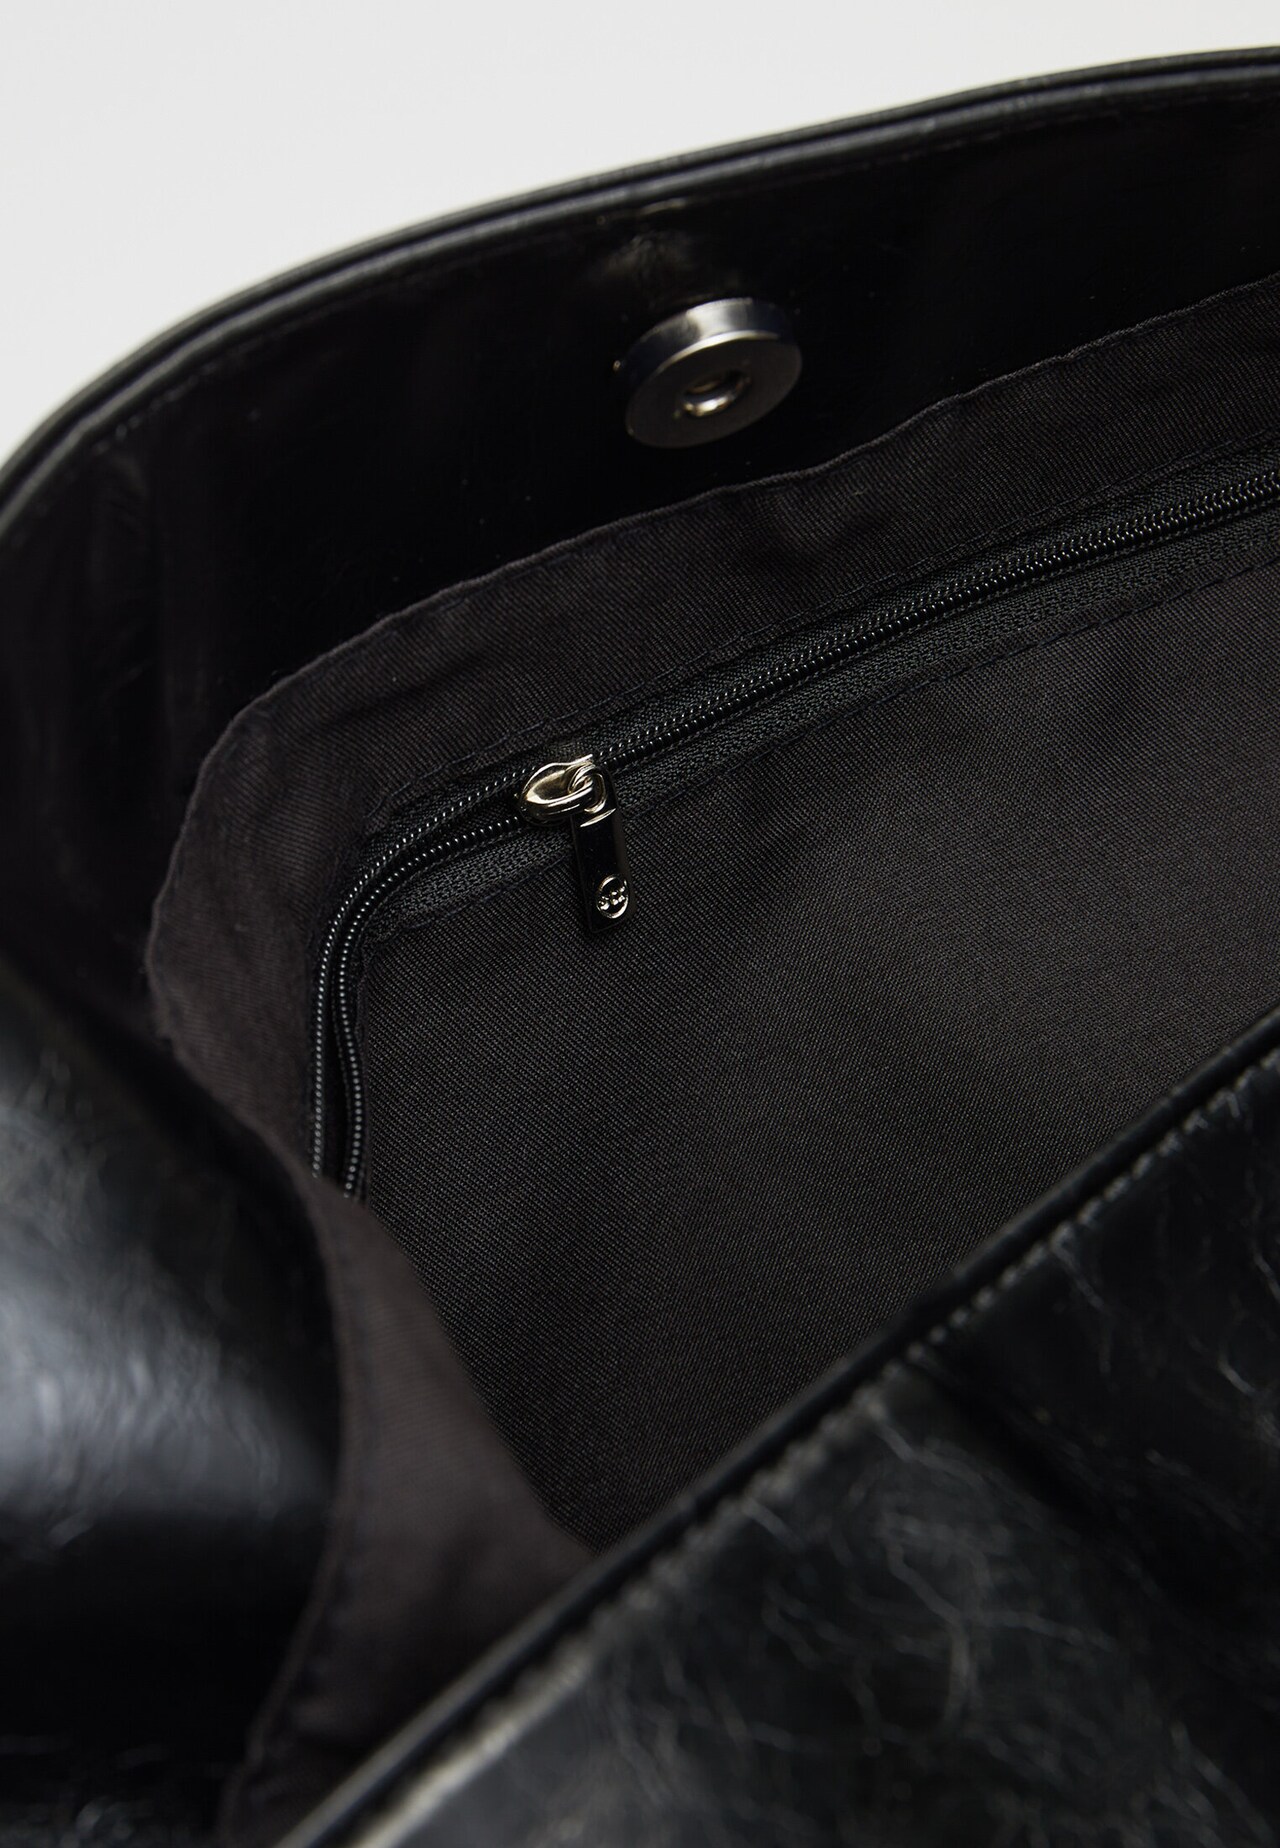 Stradivarius Leather Effect Chain Tote Bag Black M